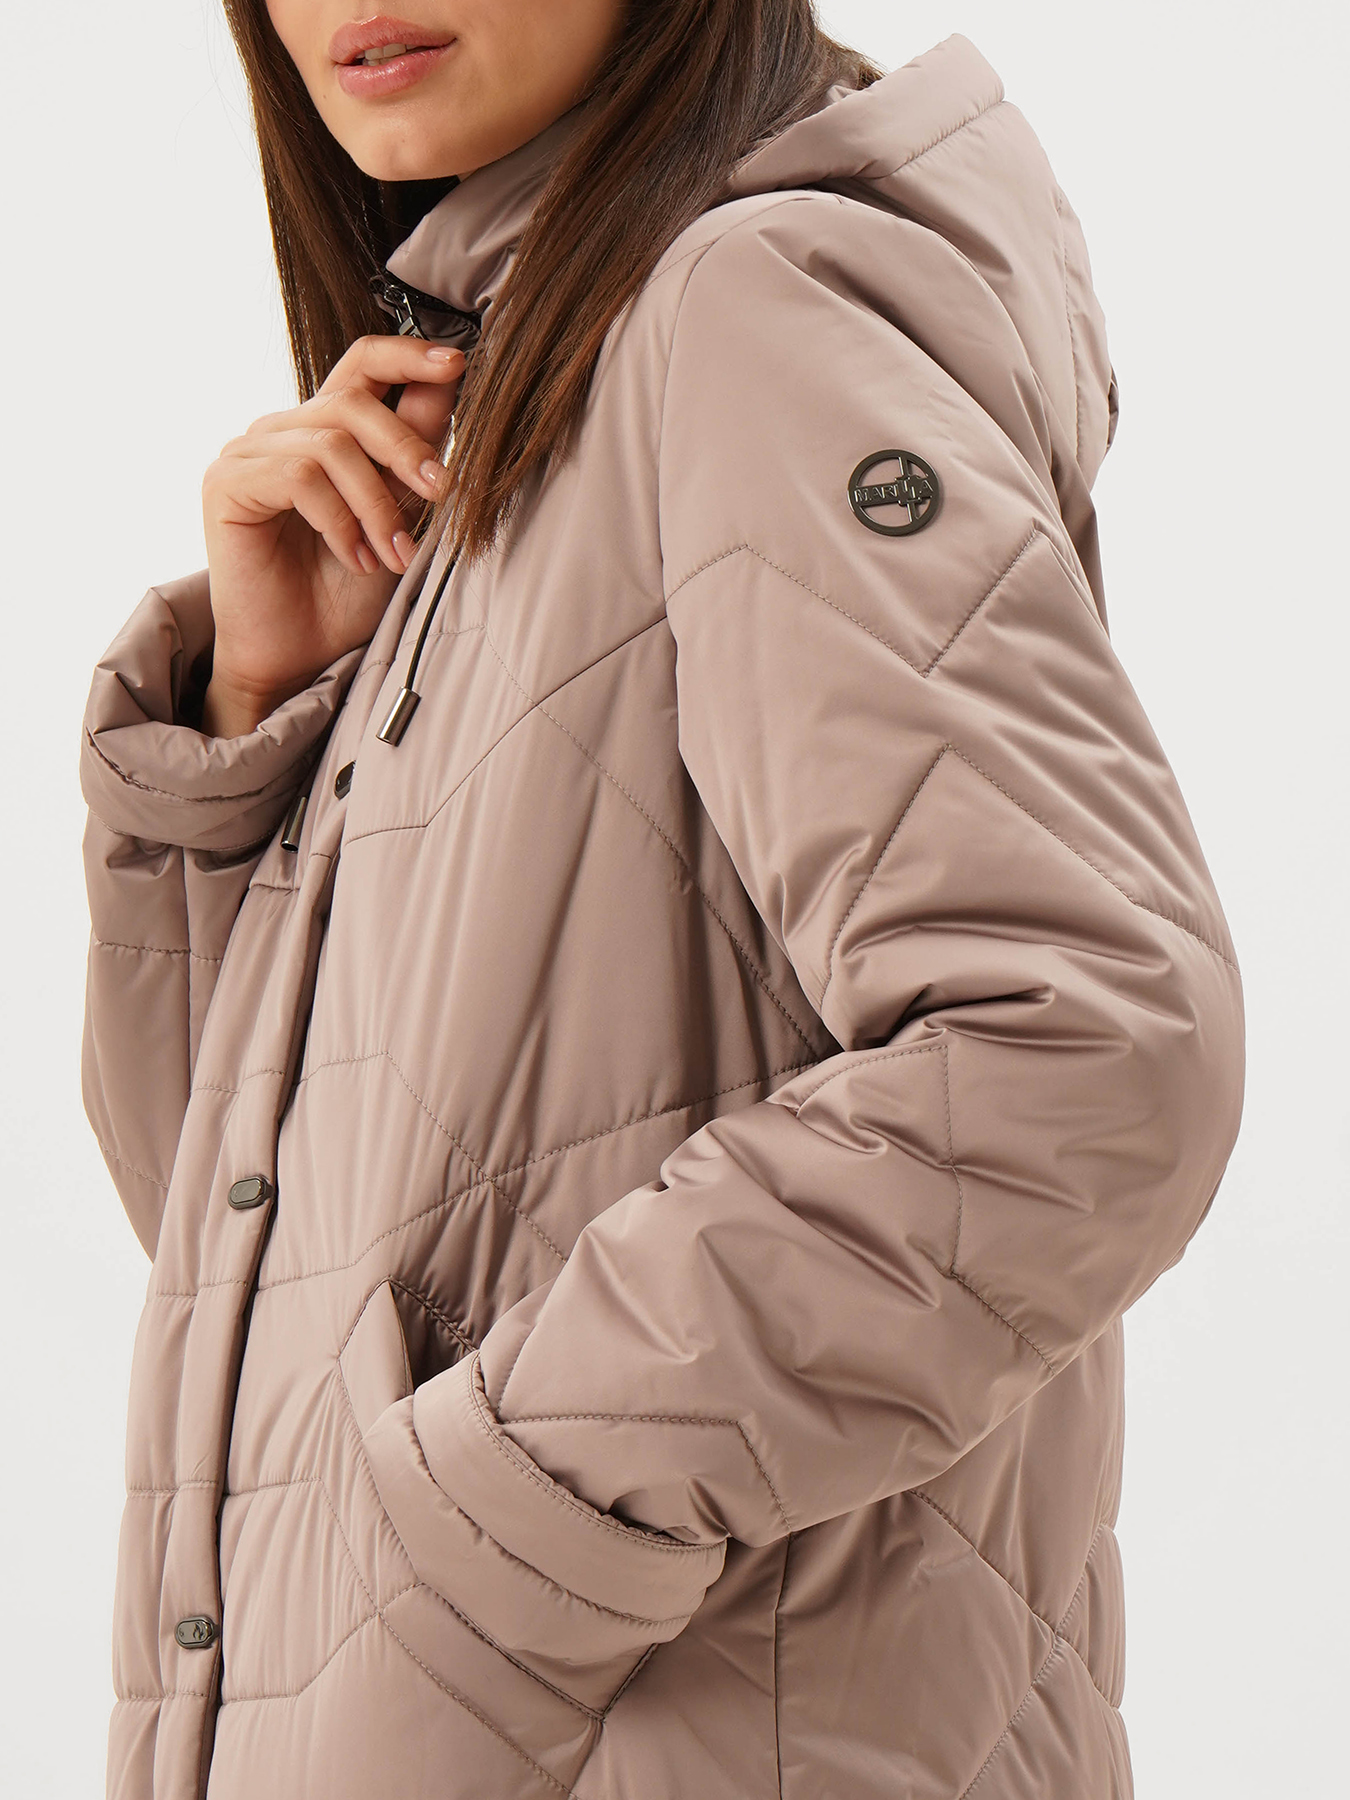 Пальто зимнее Maritta 433520-025, цвет бежевый, размер 48 - фото 2